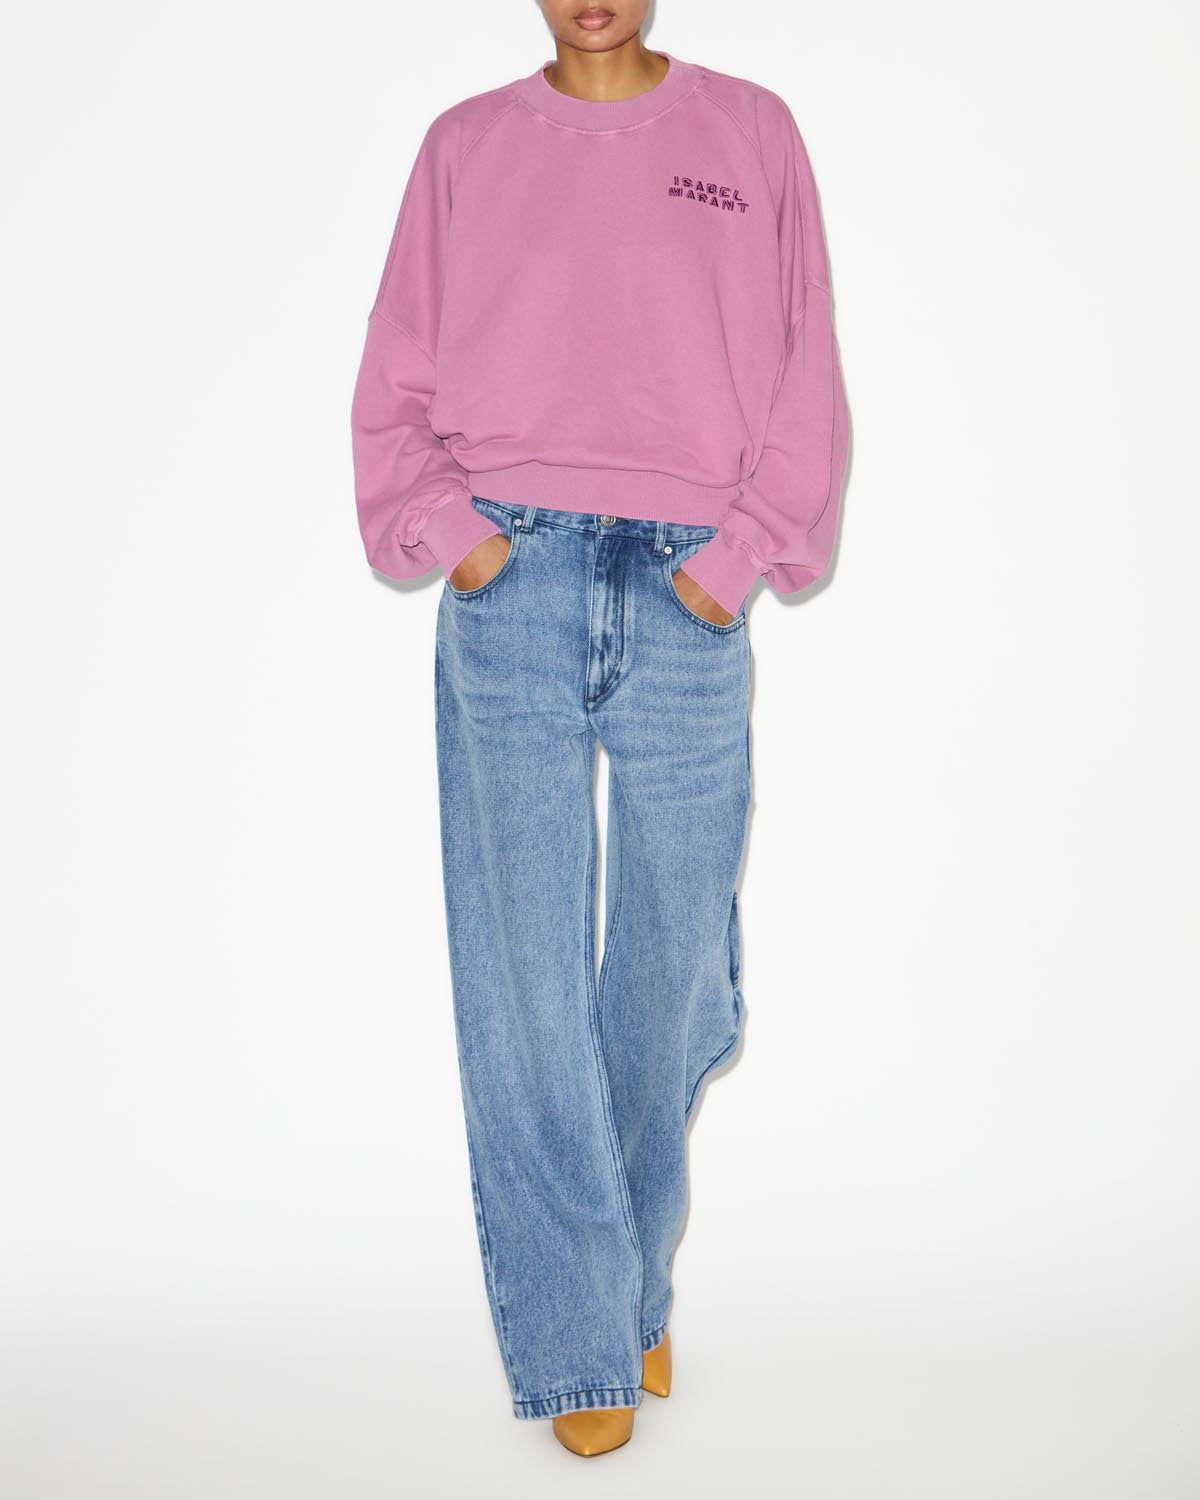 Shanice sweatshirt Woman Pink 4